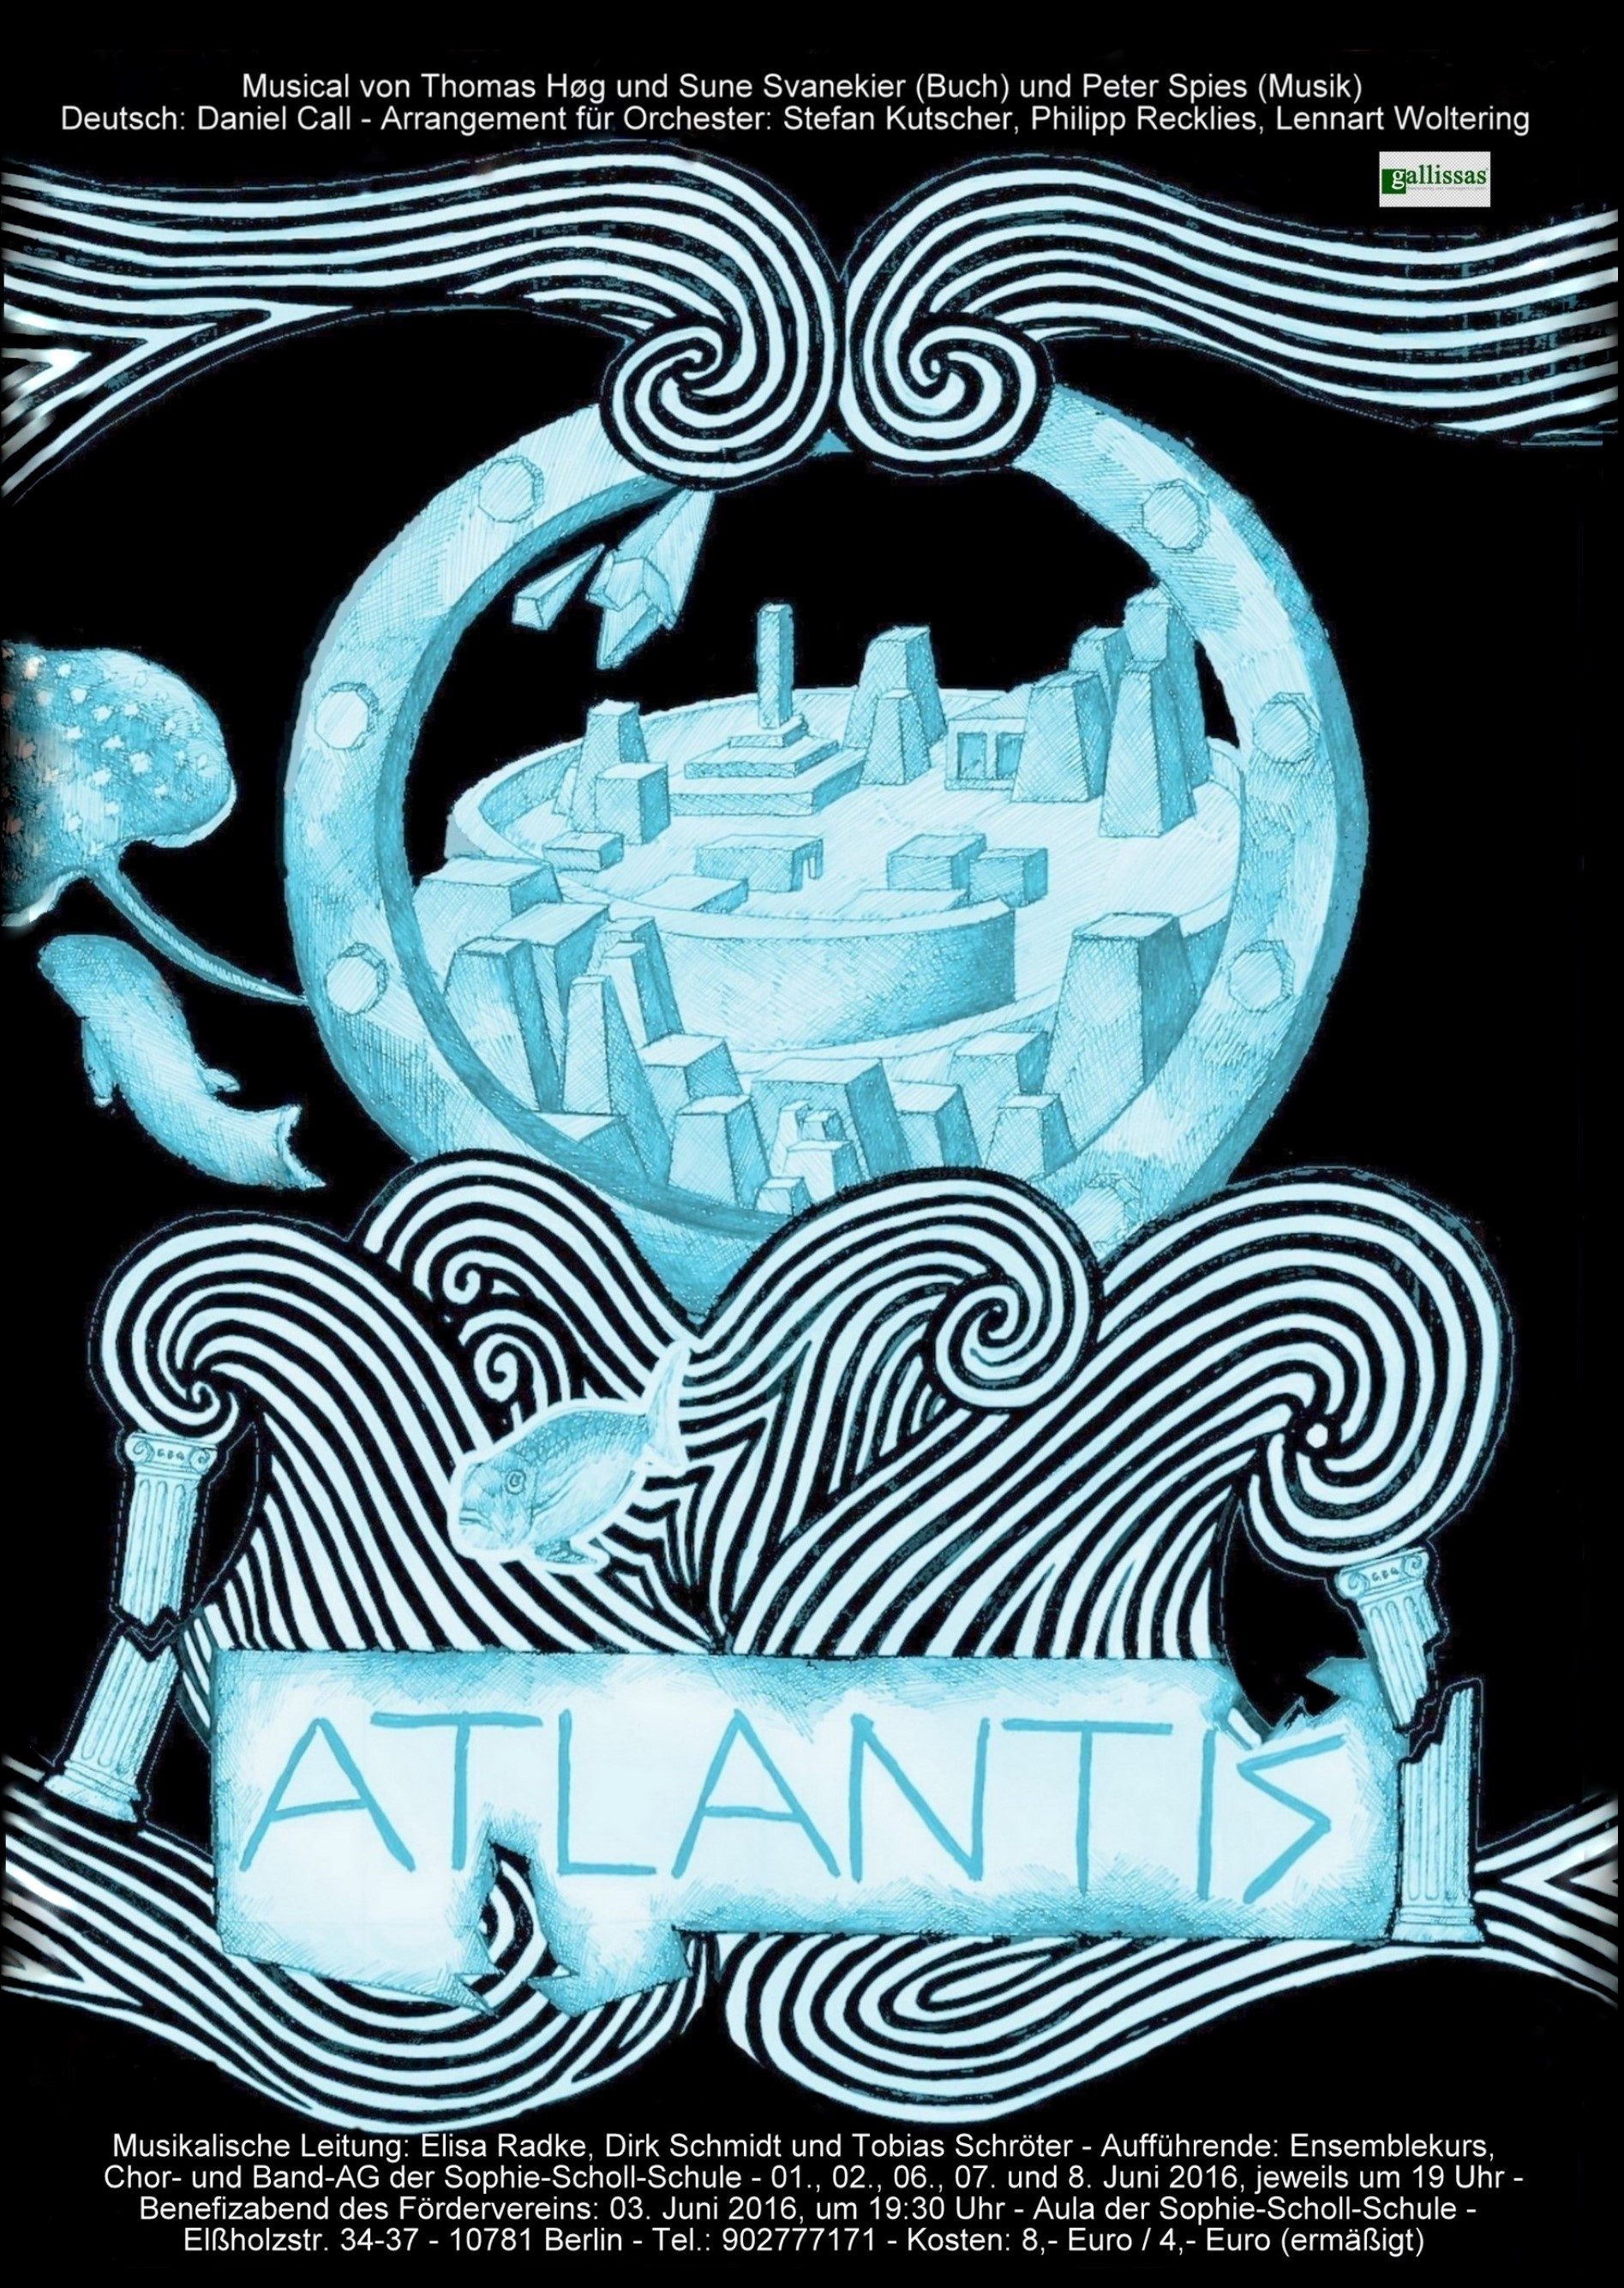 Atlantisplakat skal